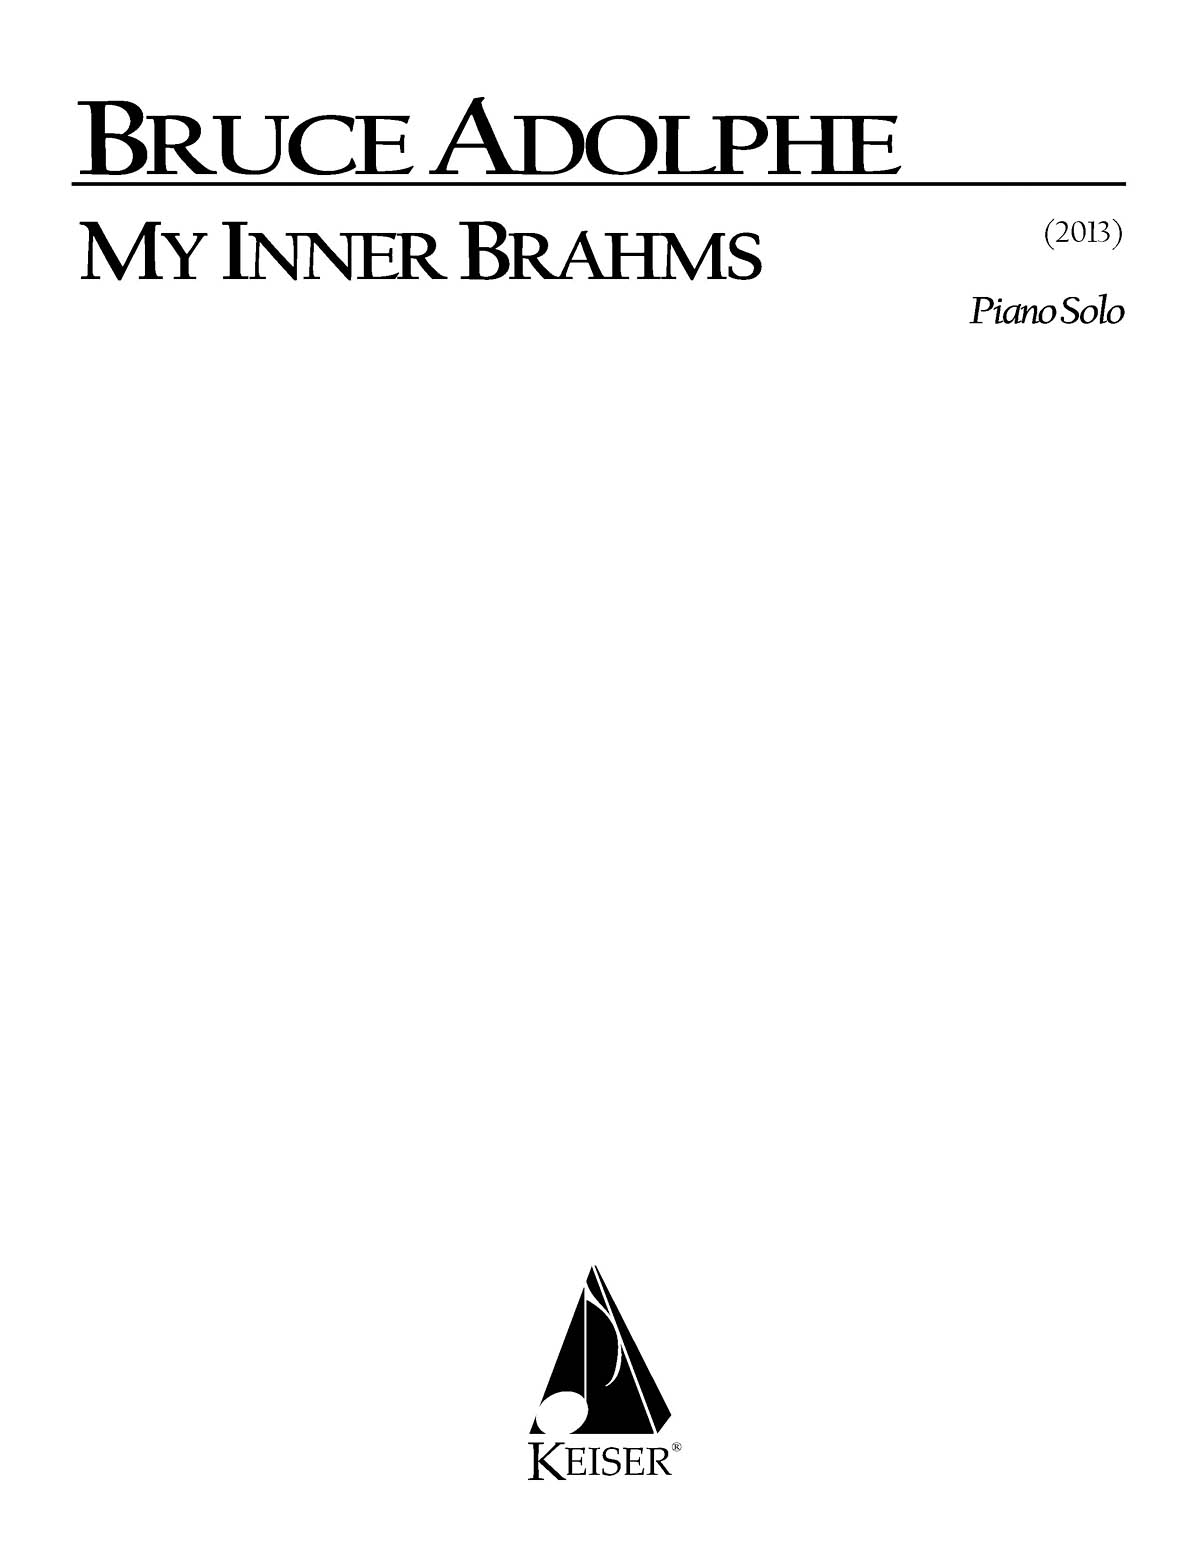 By Inner Brahms: an Intermezzo